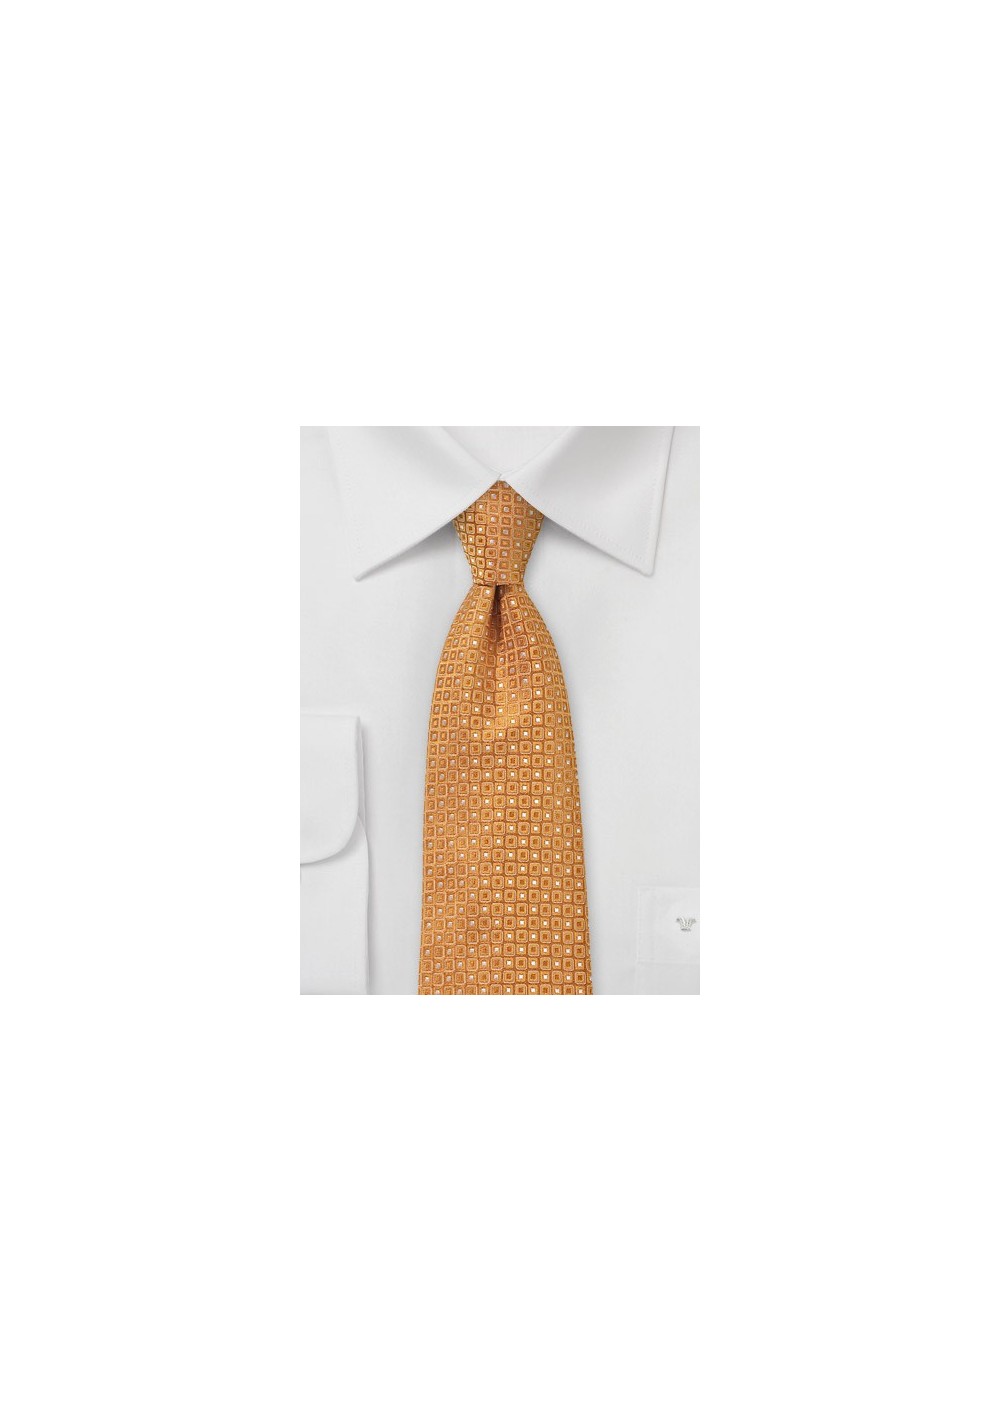 Tangerine Necktie with Contemporary Design